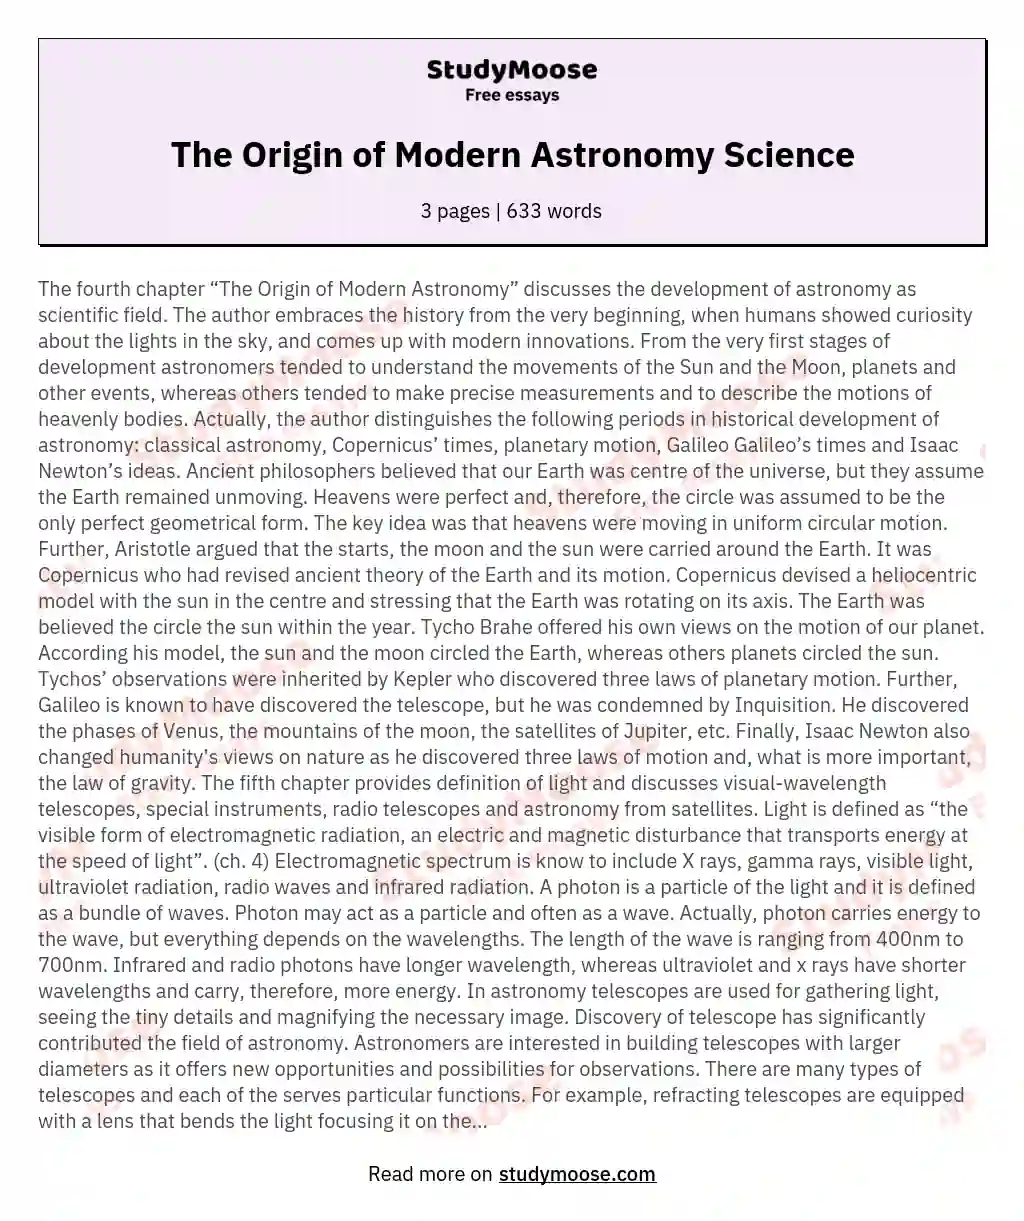 The Origin of Modern Astronomy Science